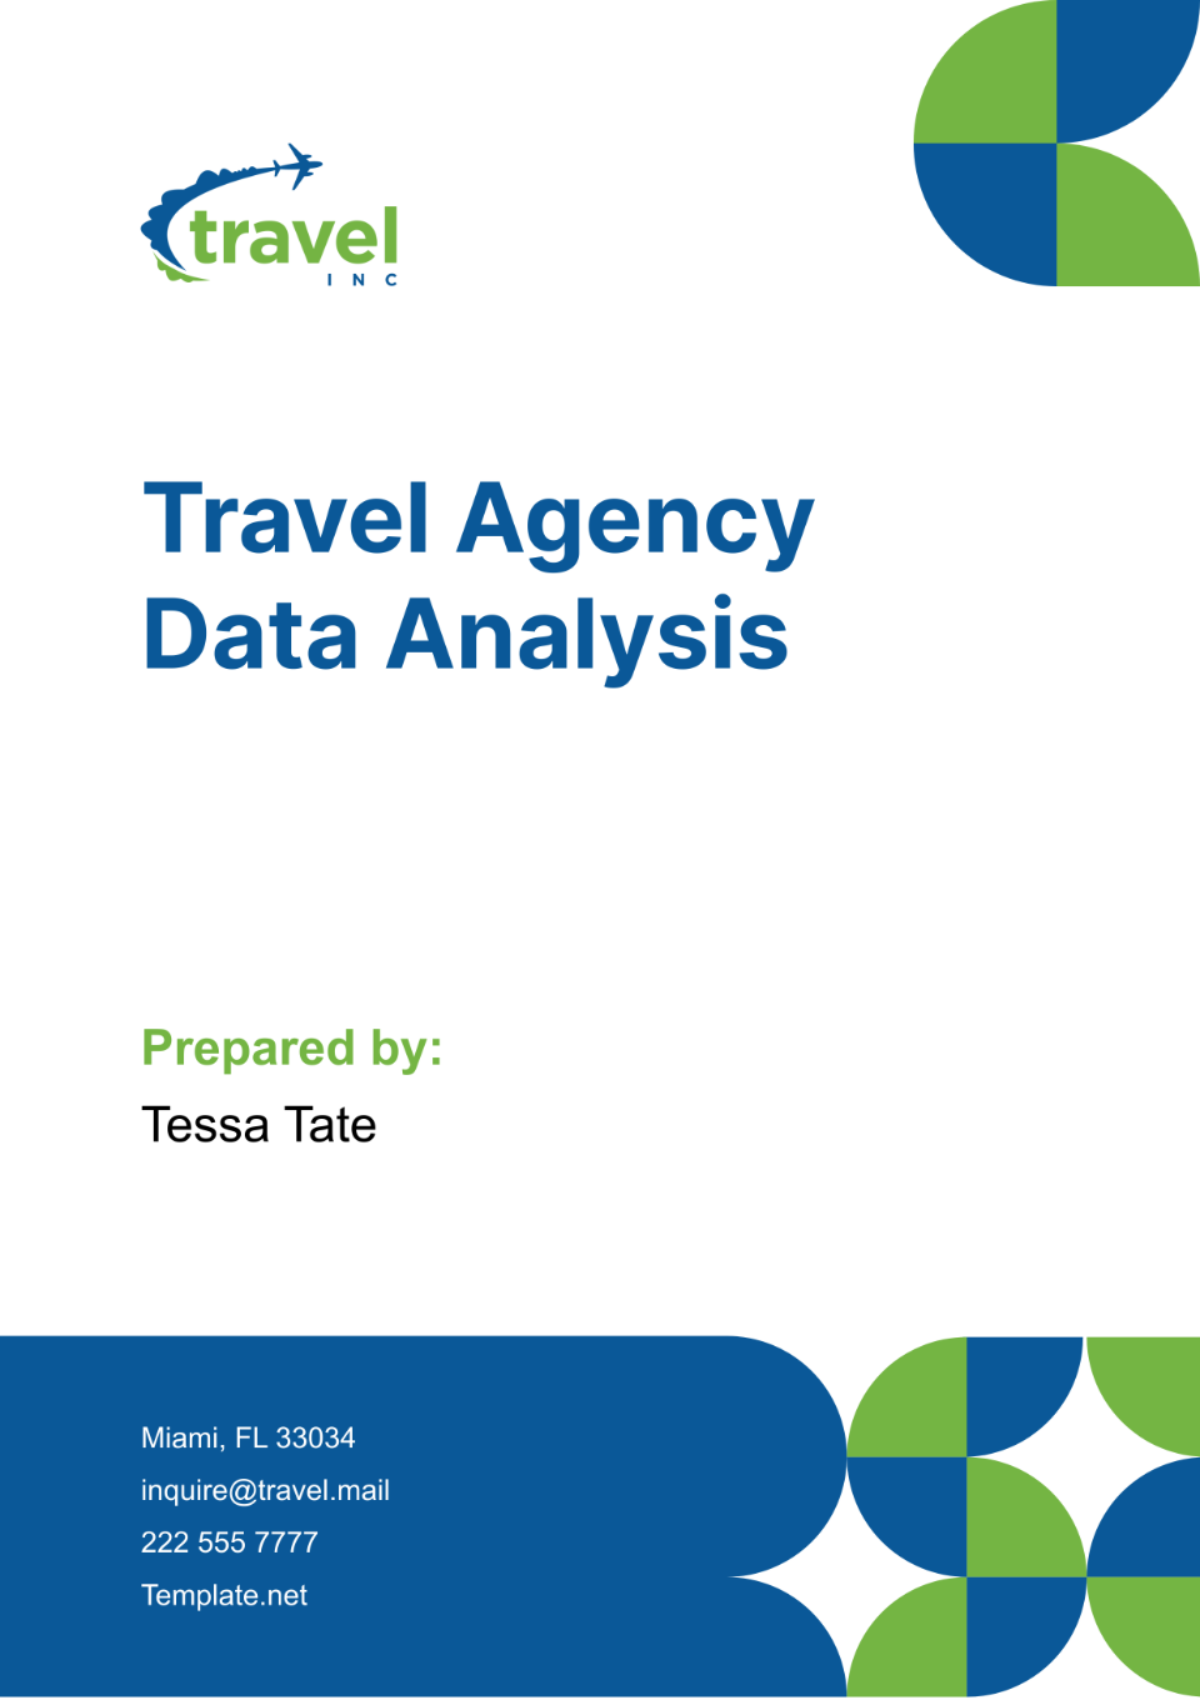 Travel Agency Data Analysis Template